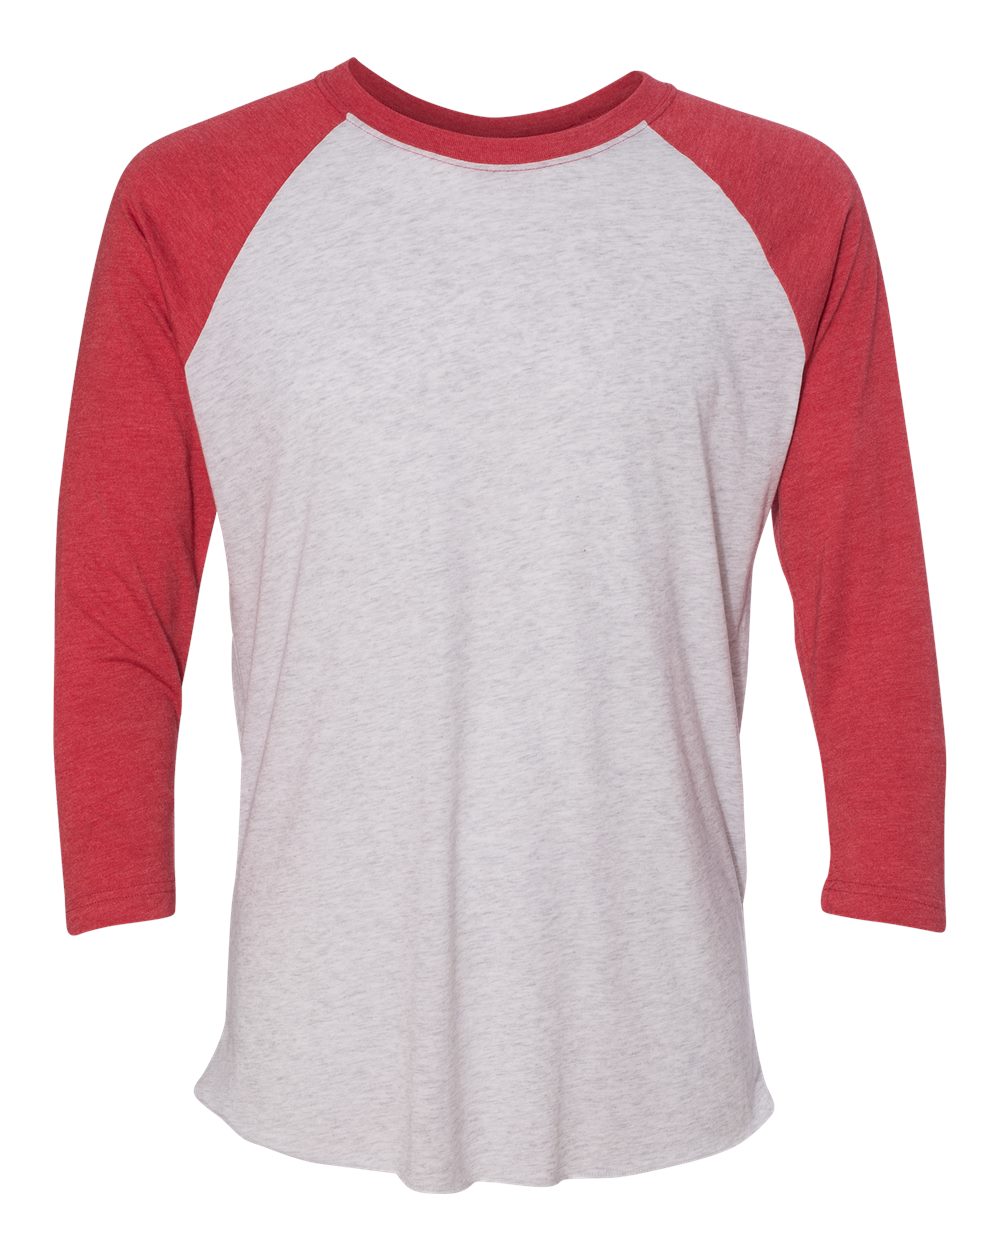 Stillwater Soccer design 1 raglan shirt